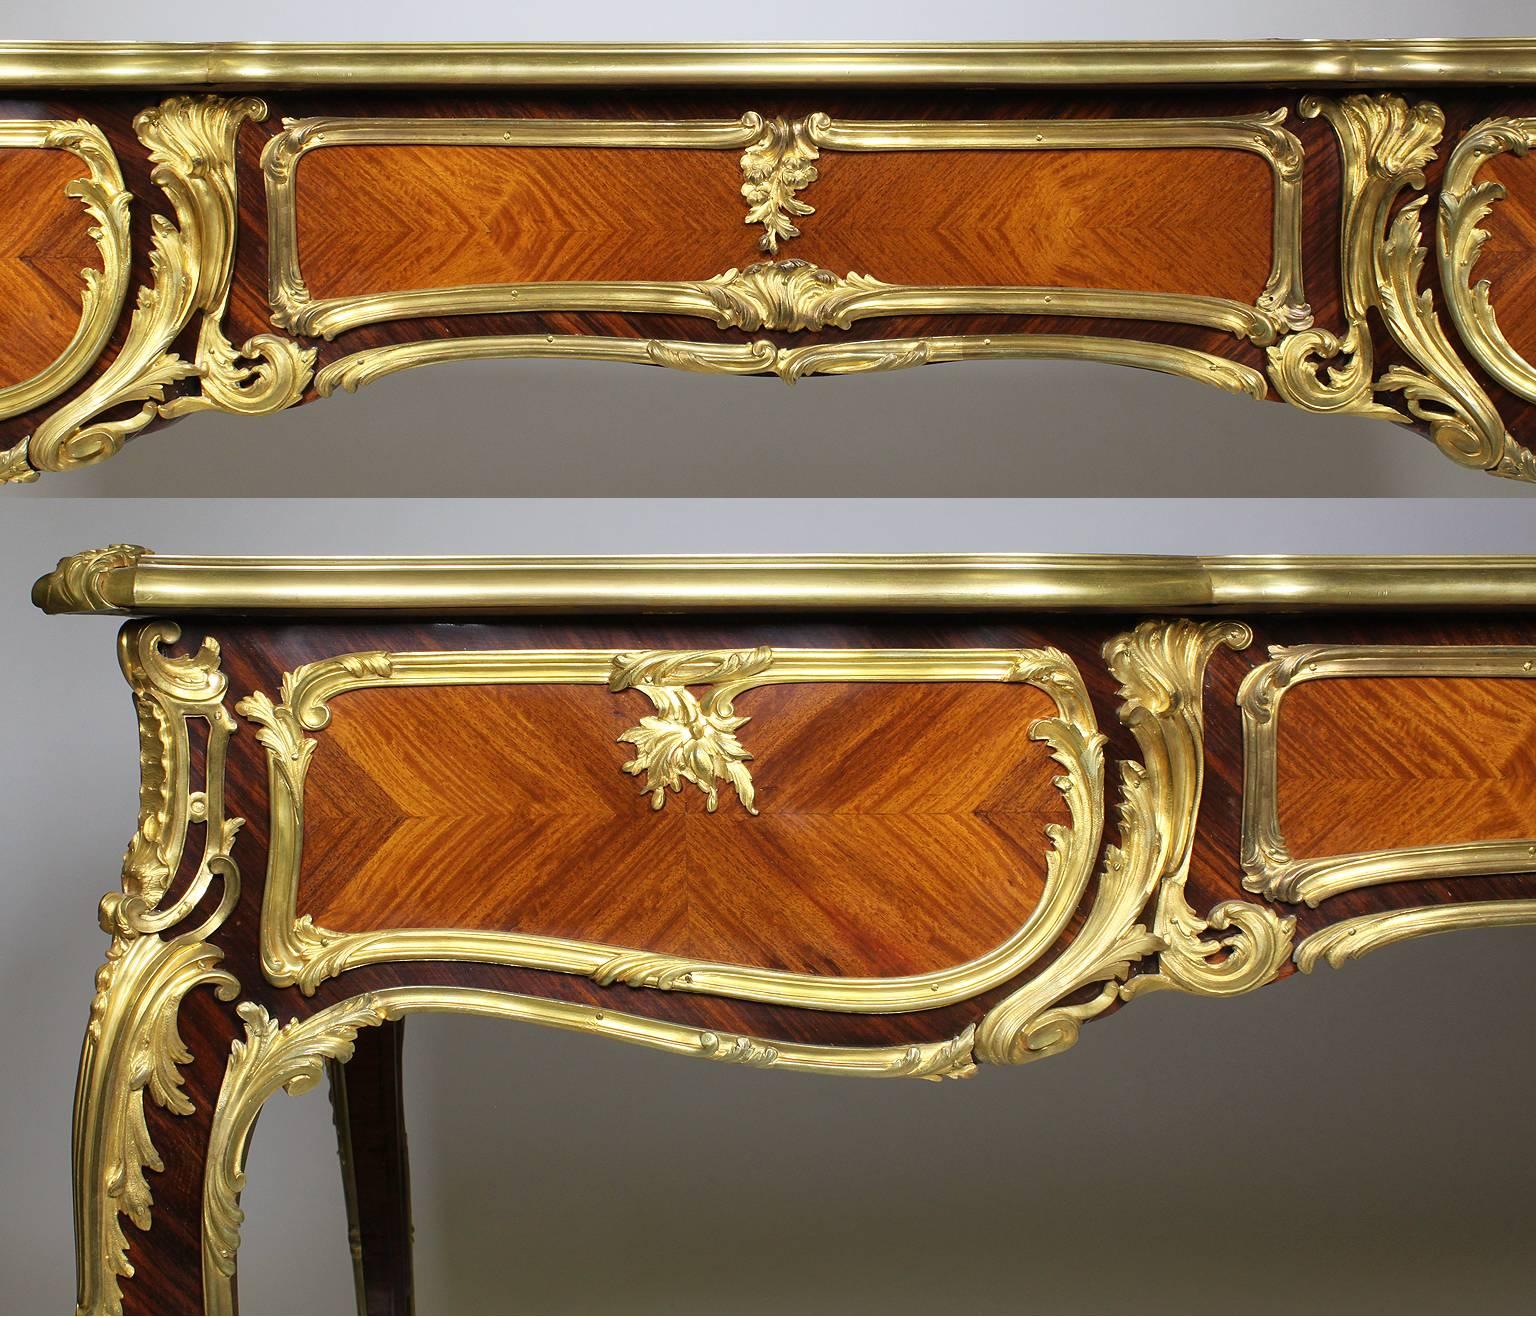 French 19th Century Louis XV Style Kingwood Gilt-Bronze Mounted Bureau Plat Desk For Sale 2